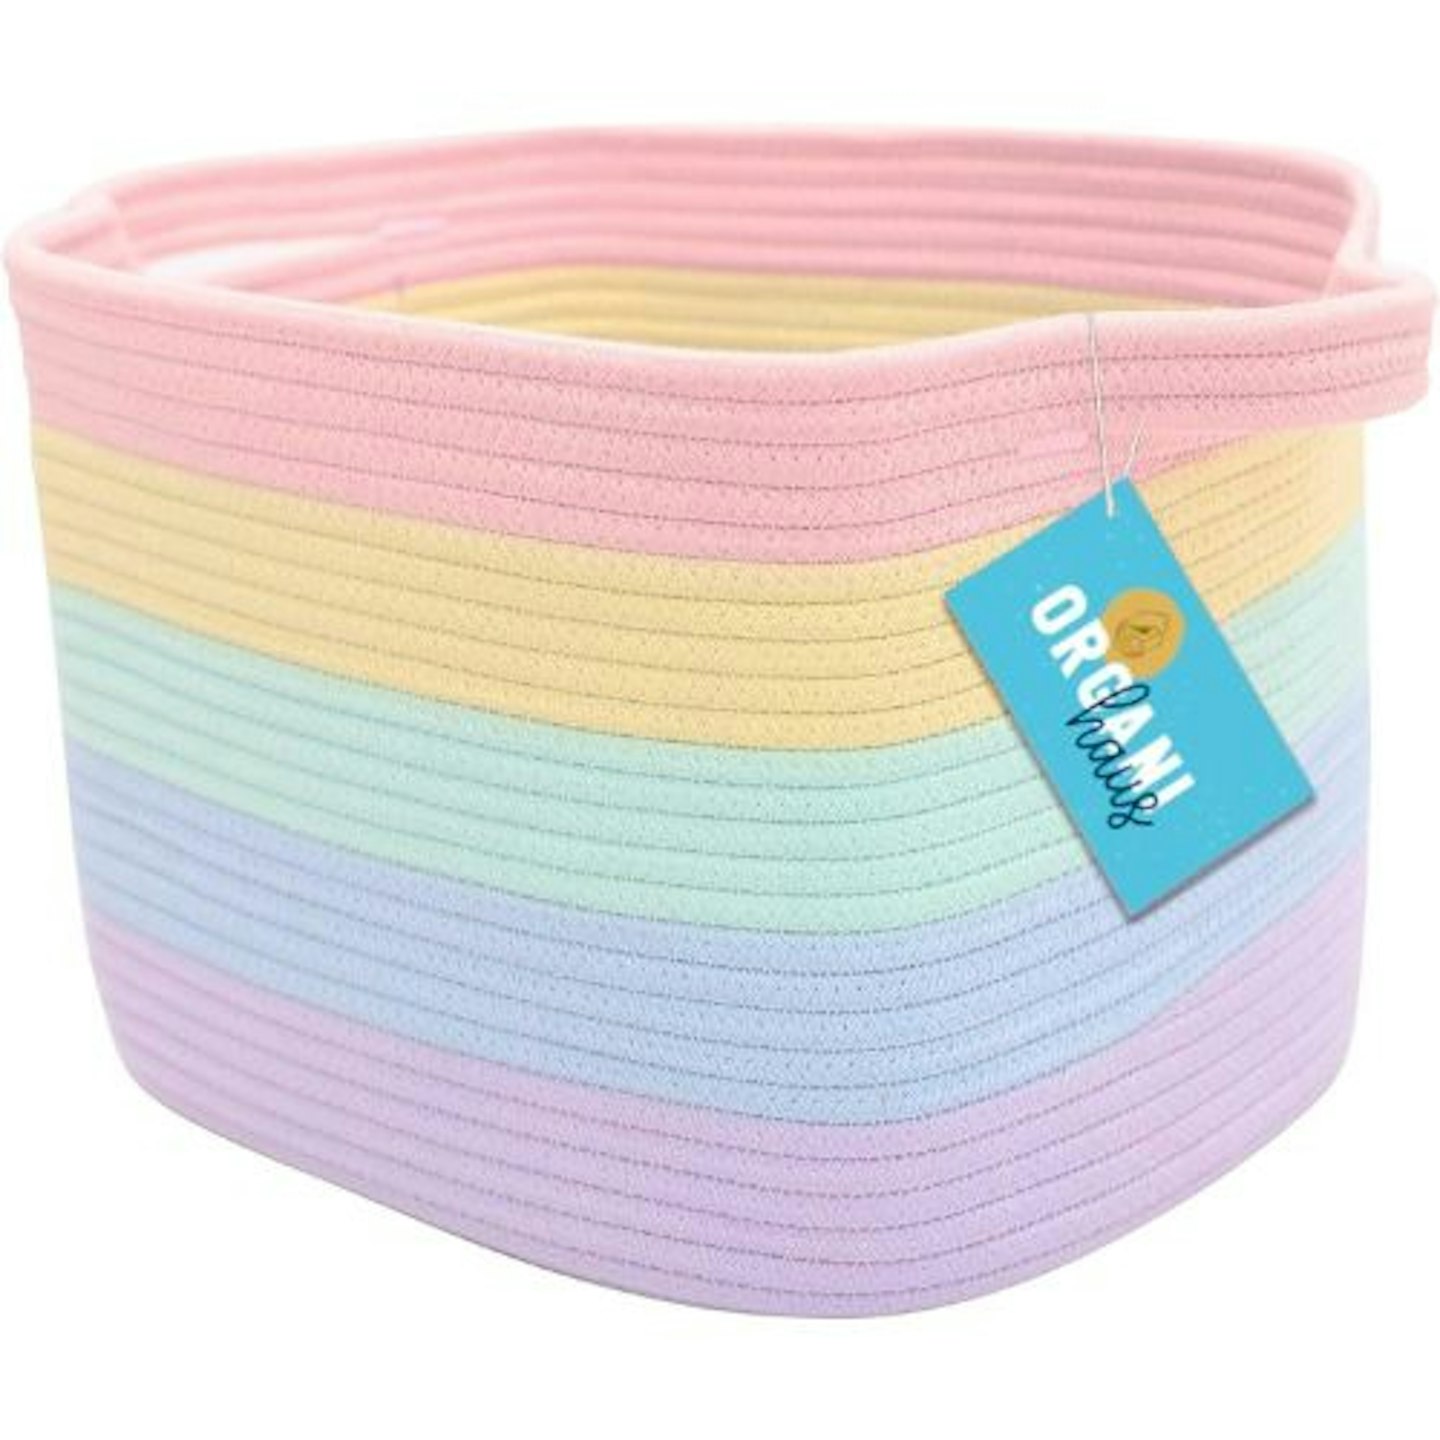 Best rainbow nursery decor OrganiHaus Rainbow Blanket Basket